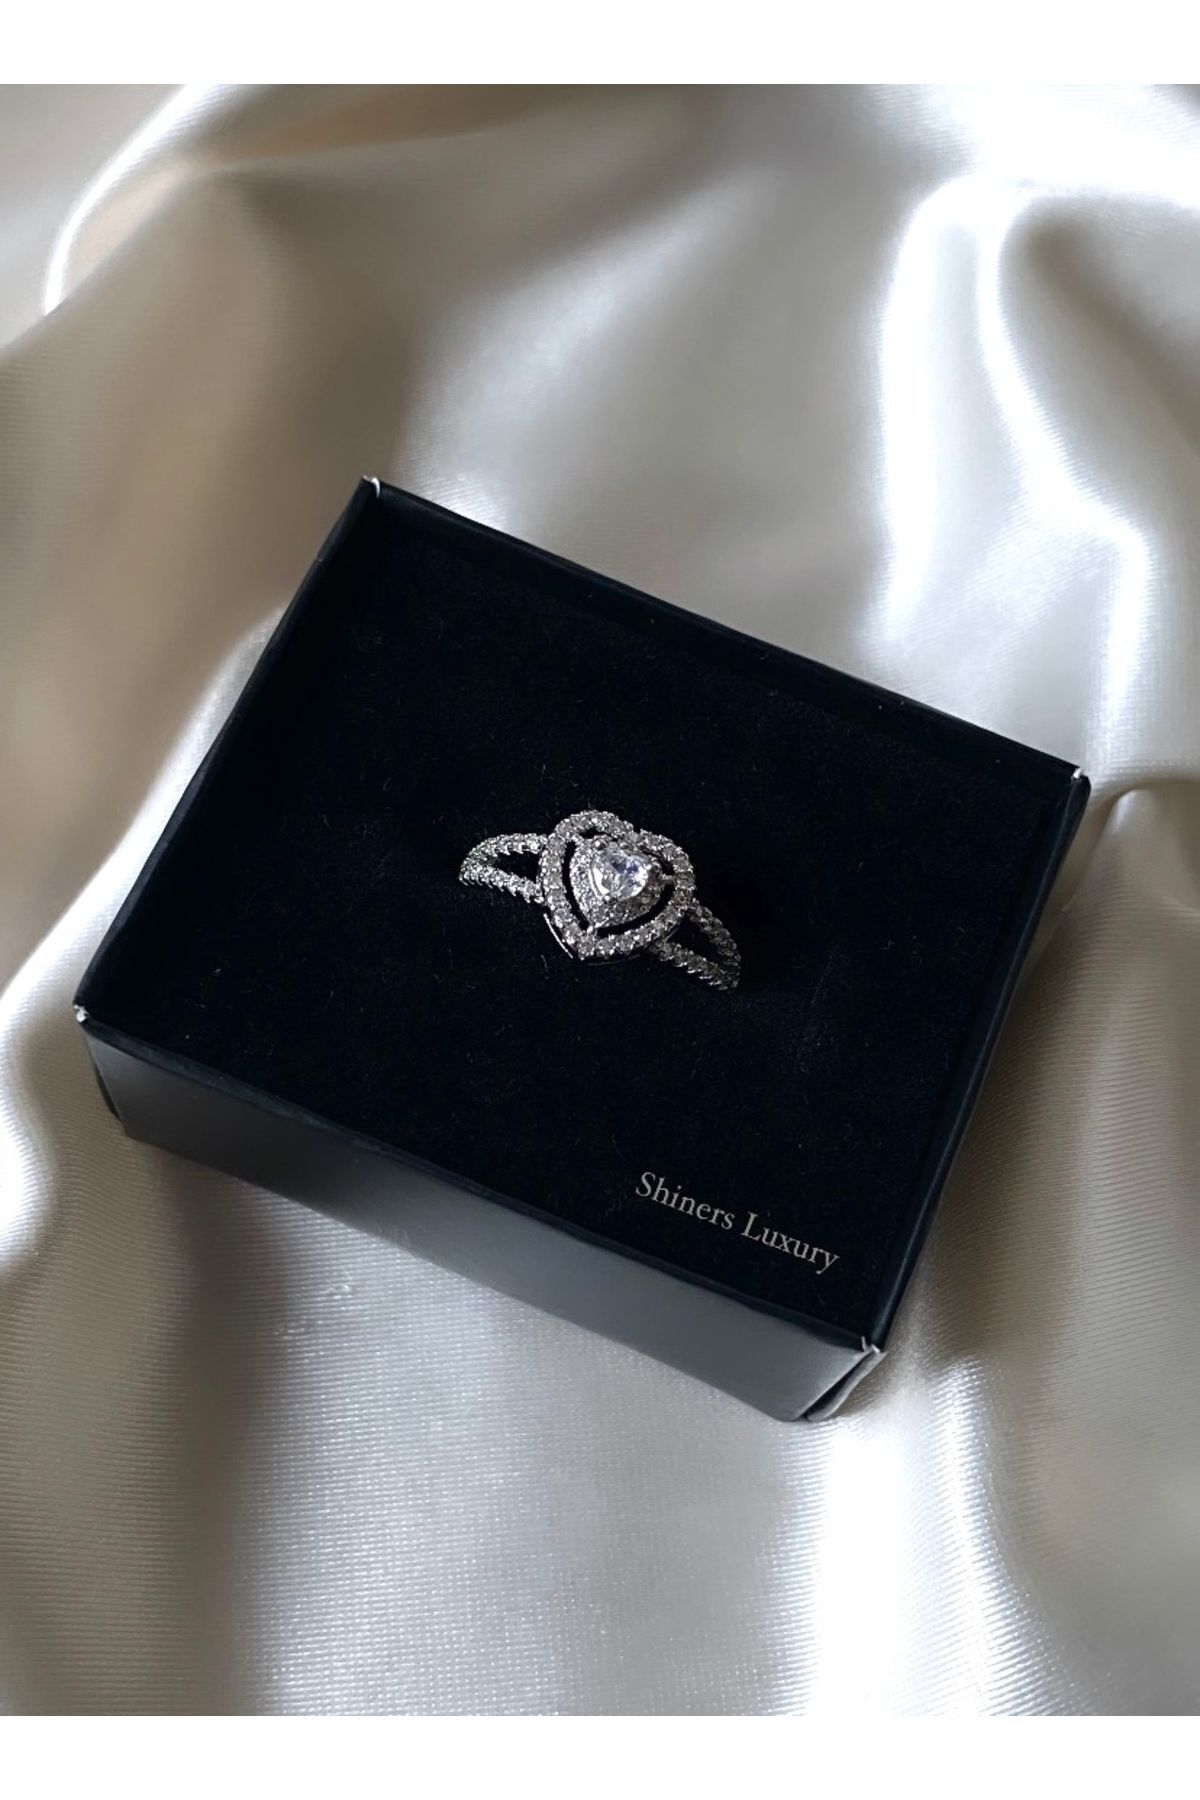 Shiners Luxury İthal Kalp Yüzük Sevgili Yüzüğü Pandora Model Ayarlanabilir